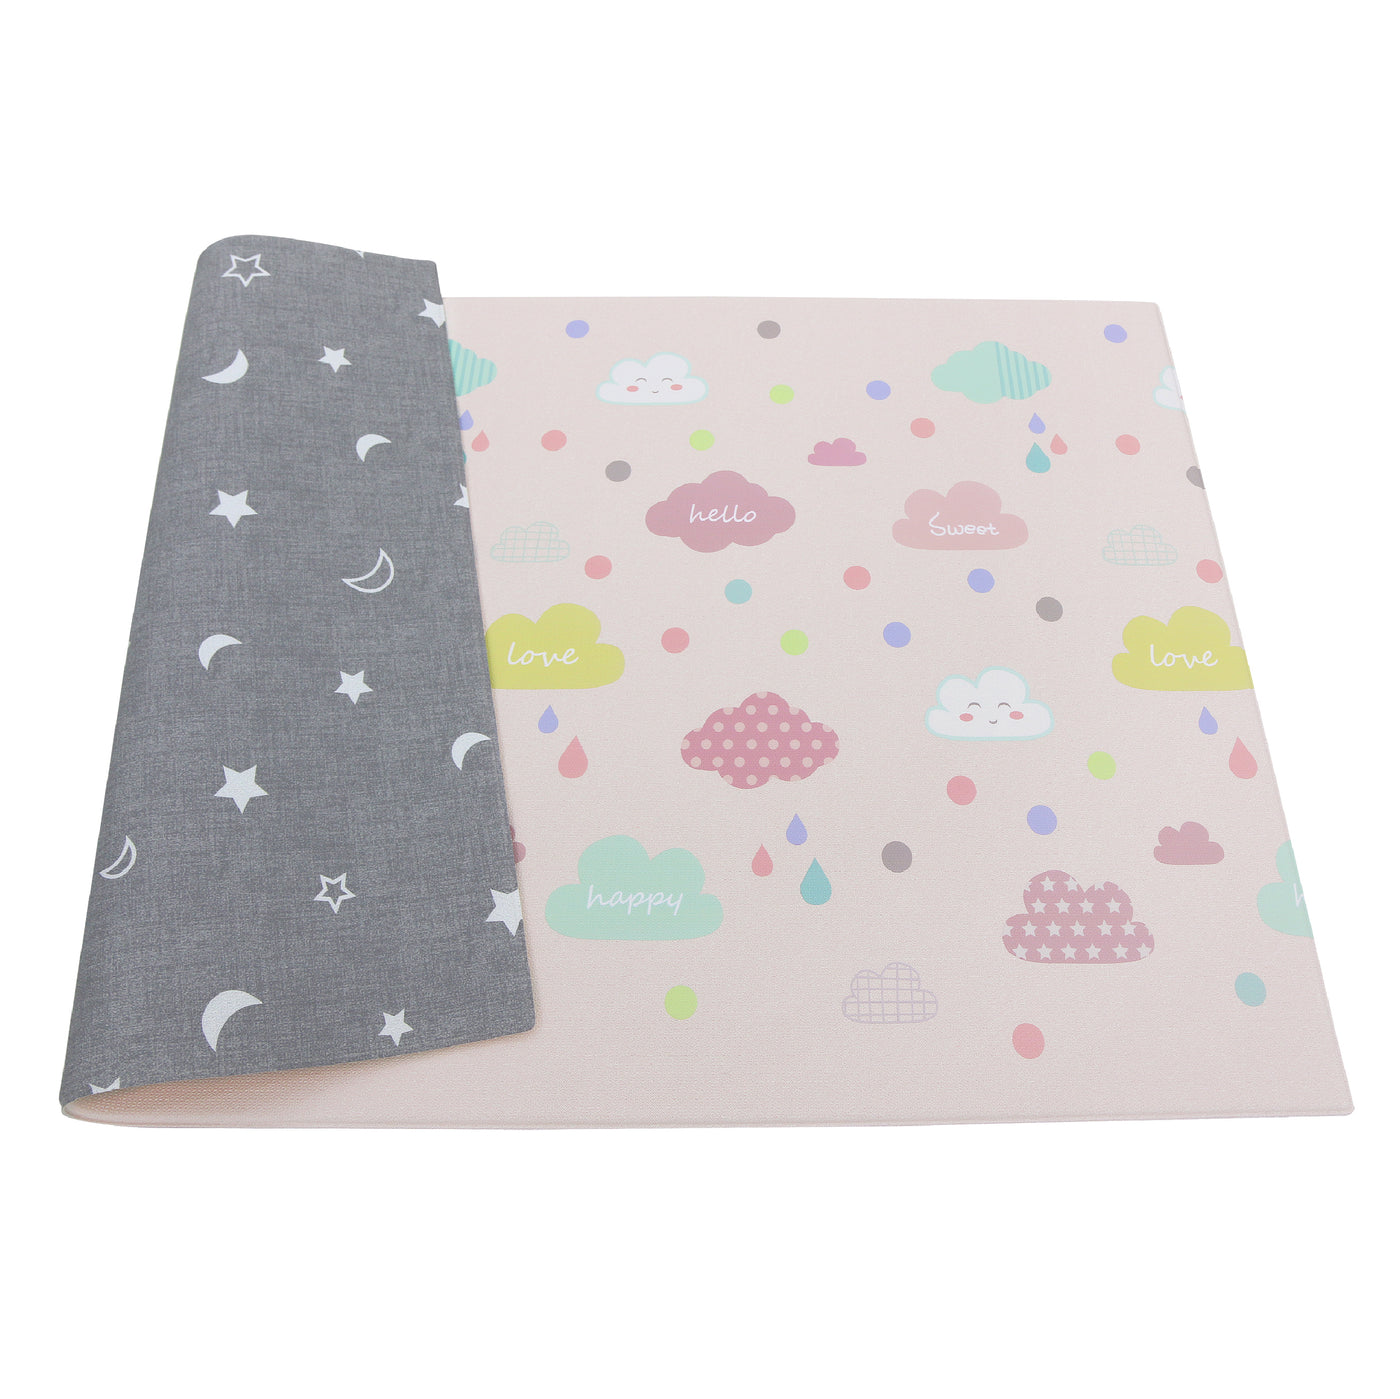 Baby Care Playmat - Happy Cloud - Large